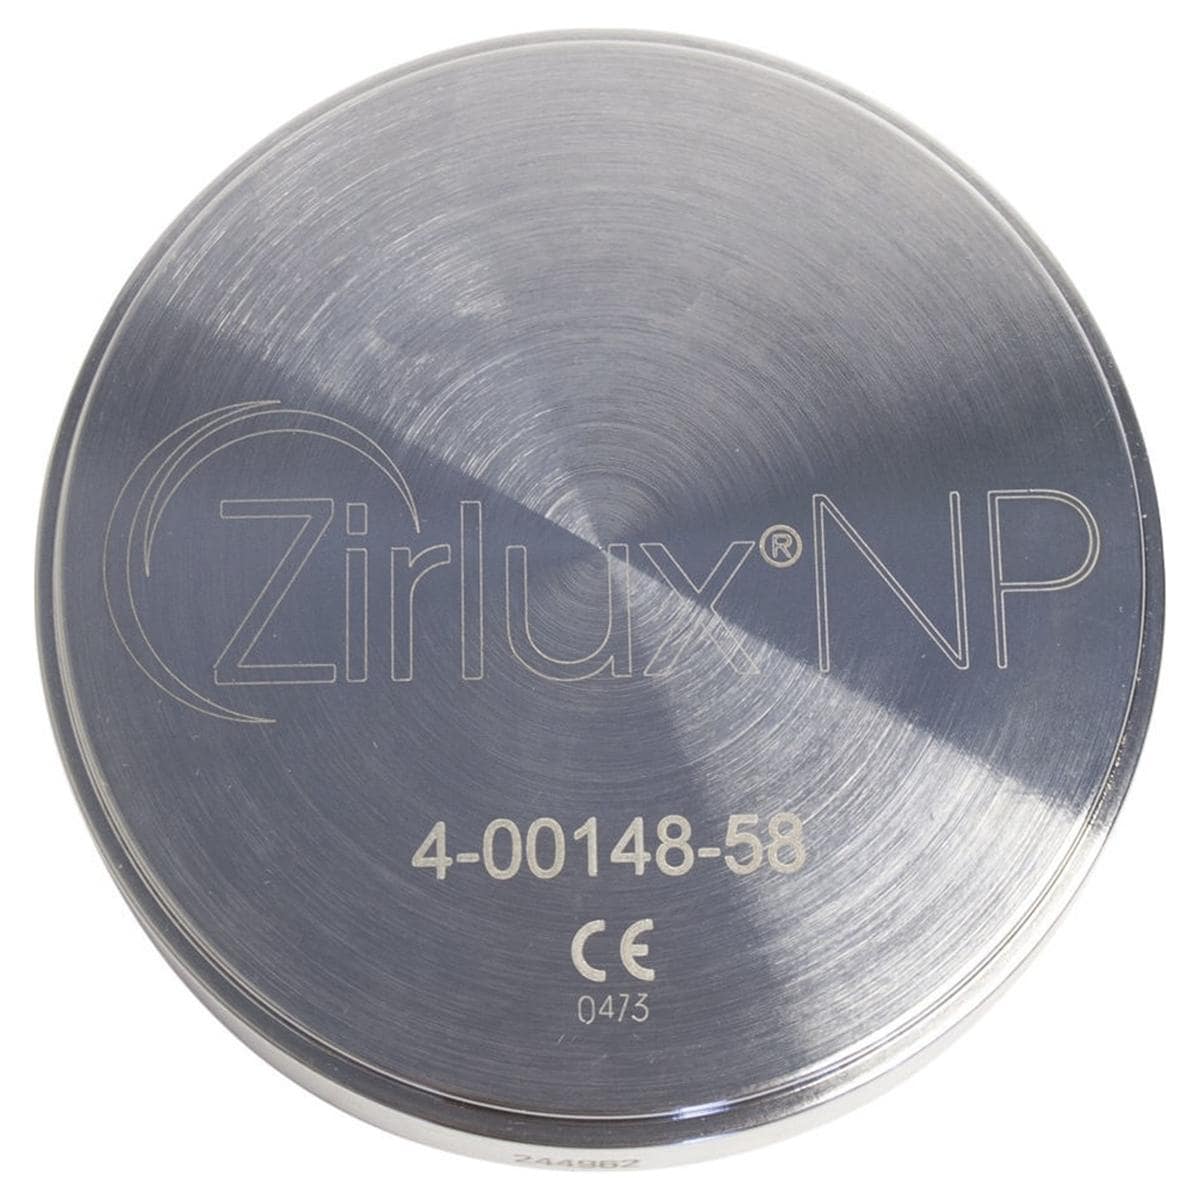 ZIRLUX NP CoCr Ronde ohne Stufe - Ø 99,5 mm - Stärke 12 mm